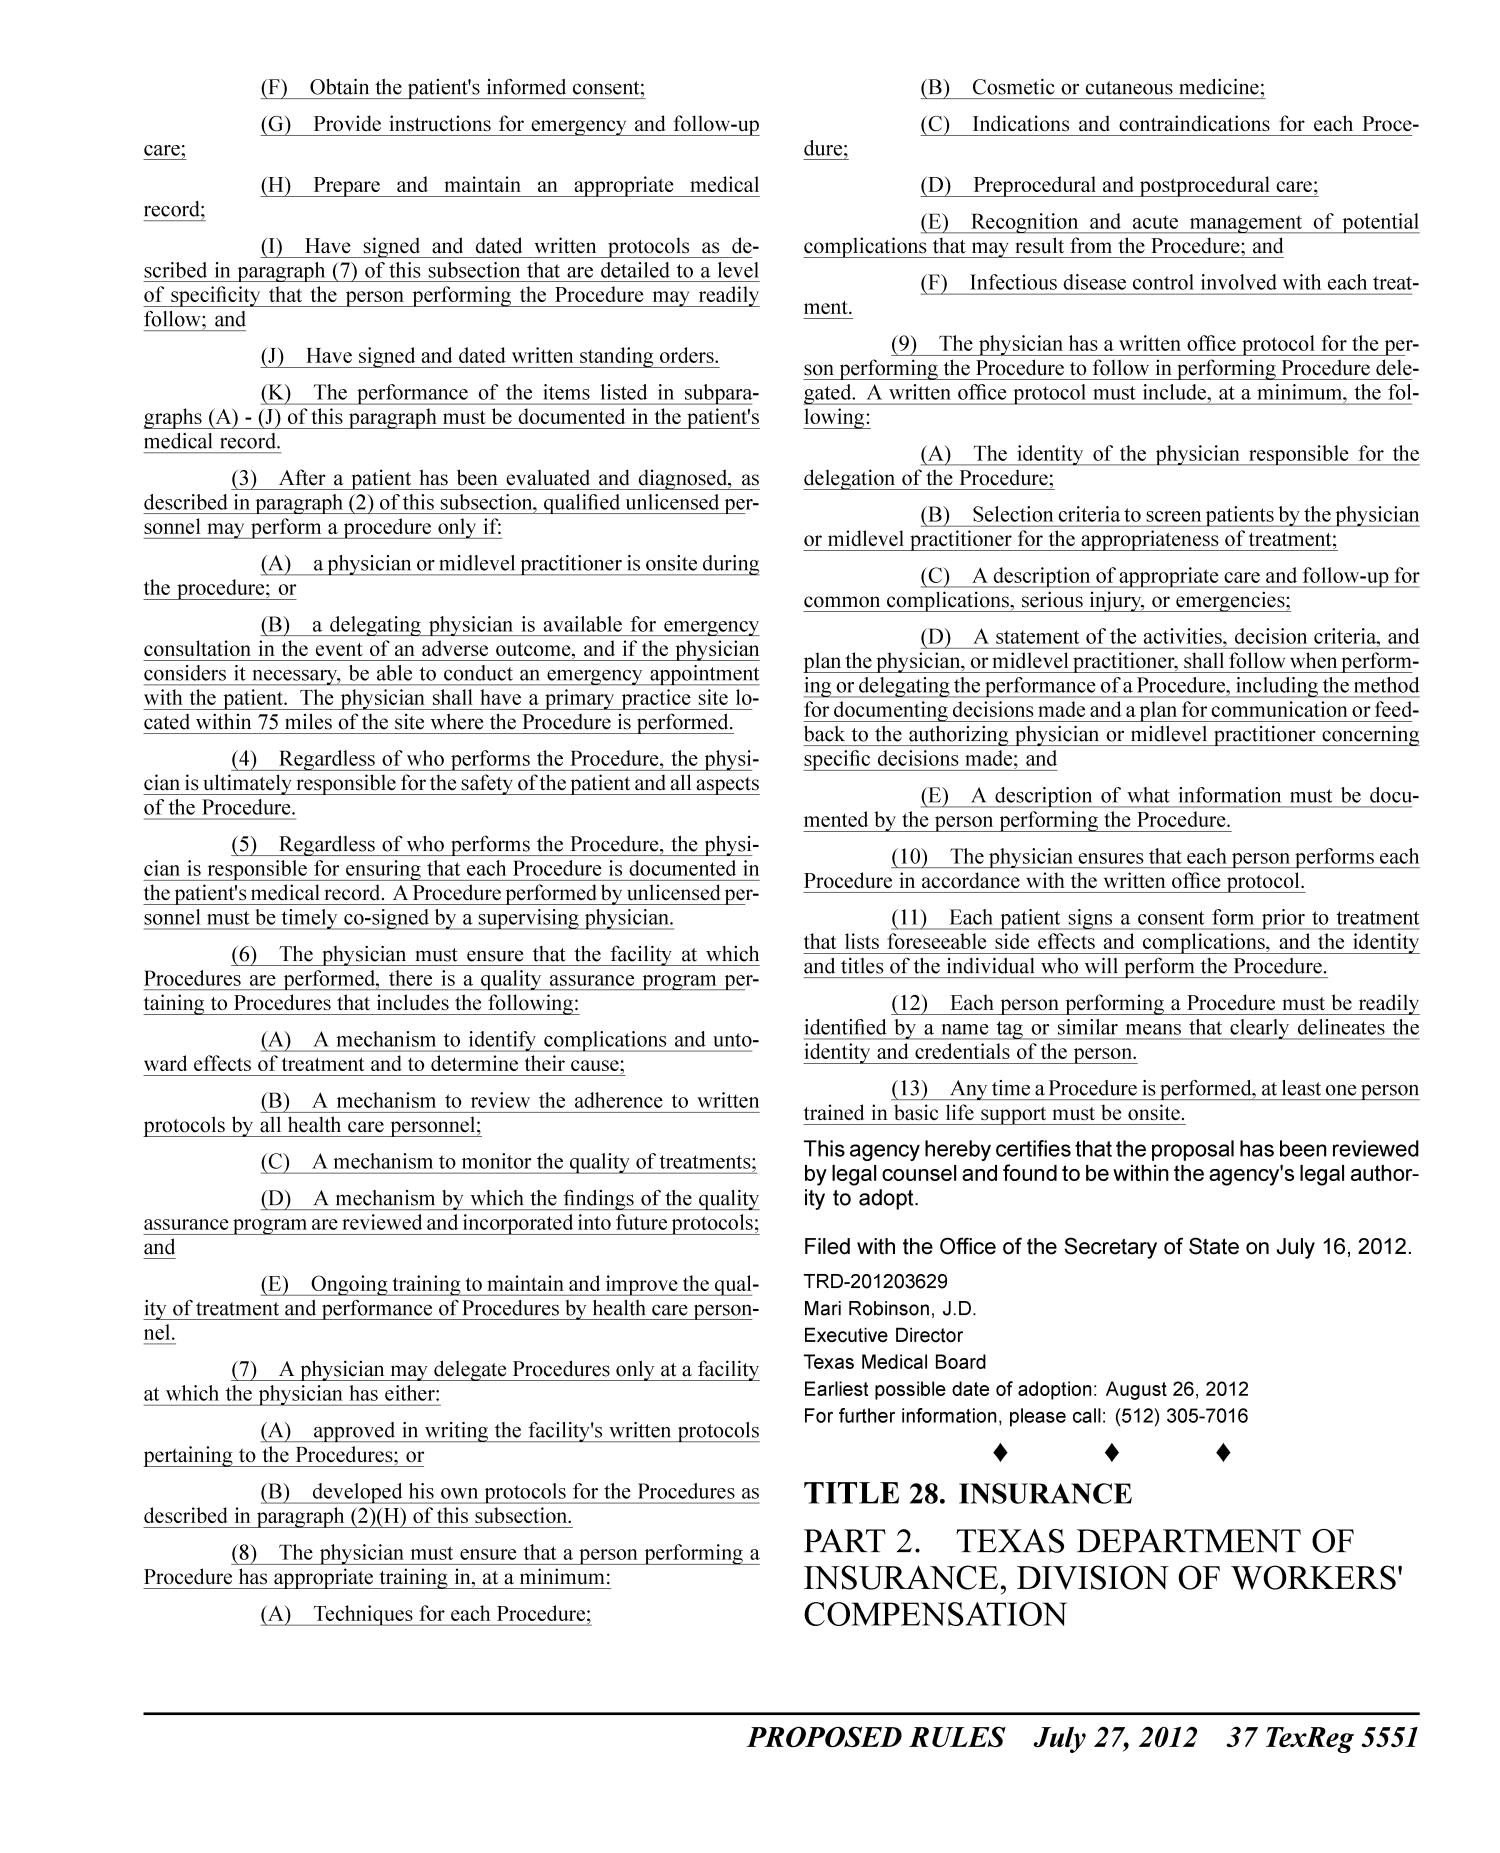 Texas Register, Volume 37, Number 30, Pages 5519-5676, July 27, 2012
                                                
                                                    5551
                                                